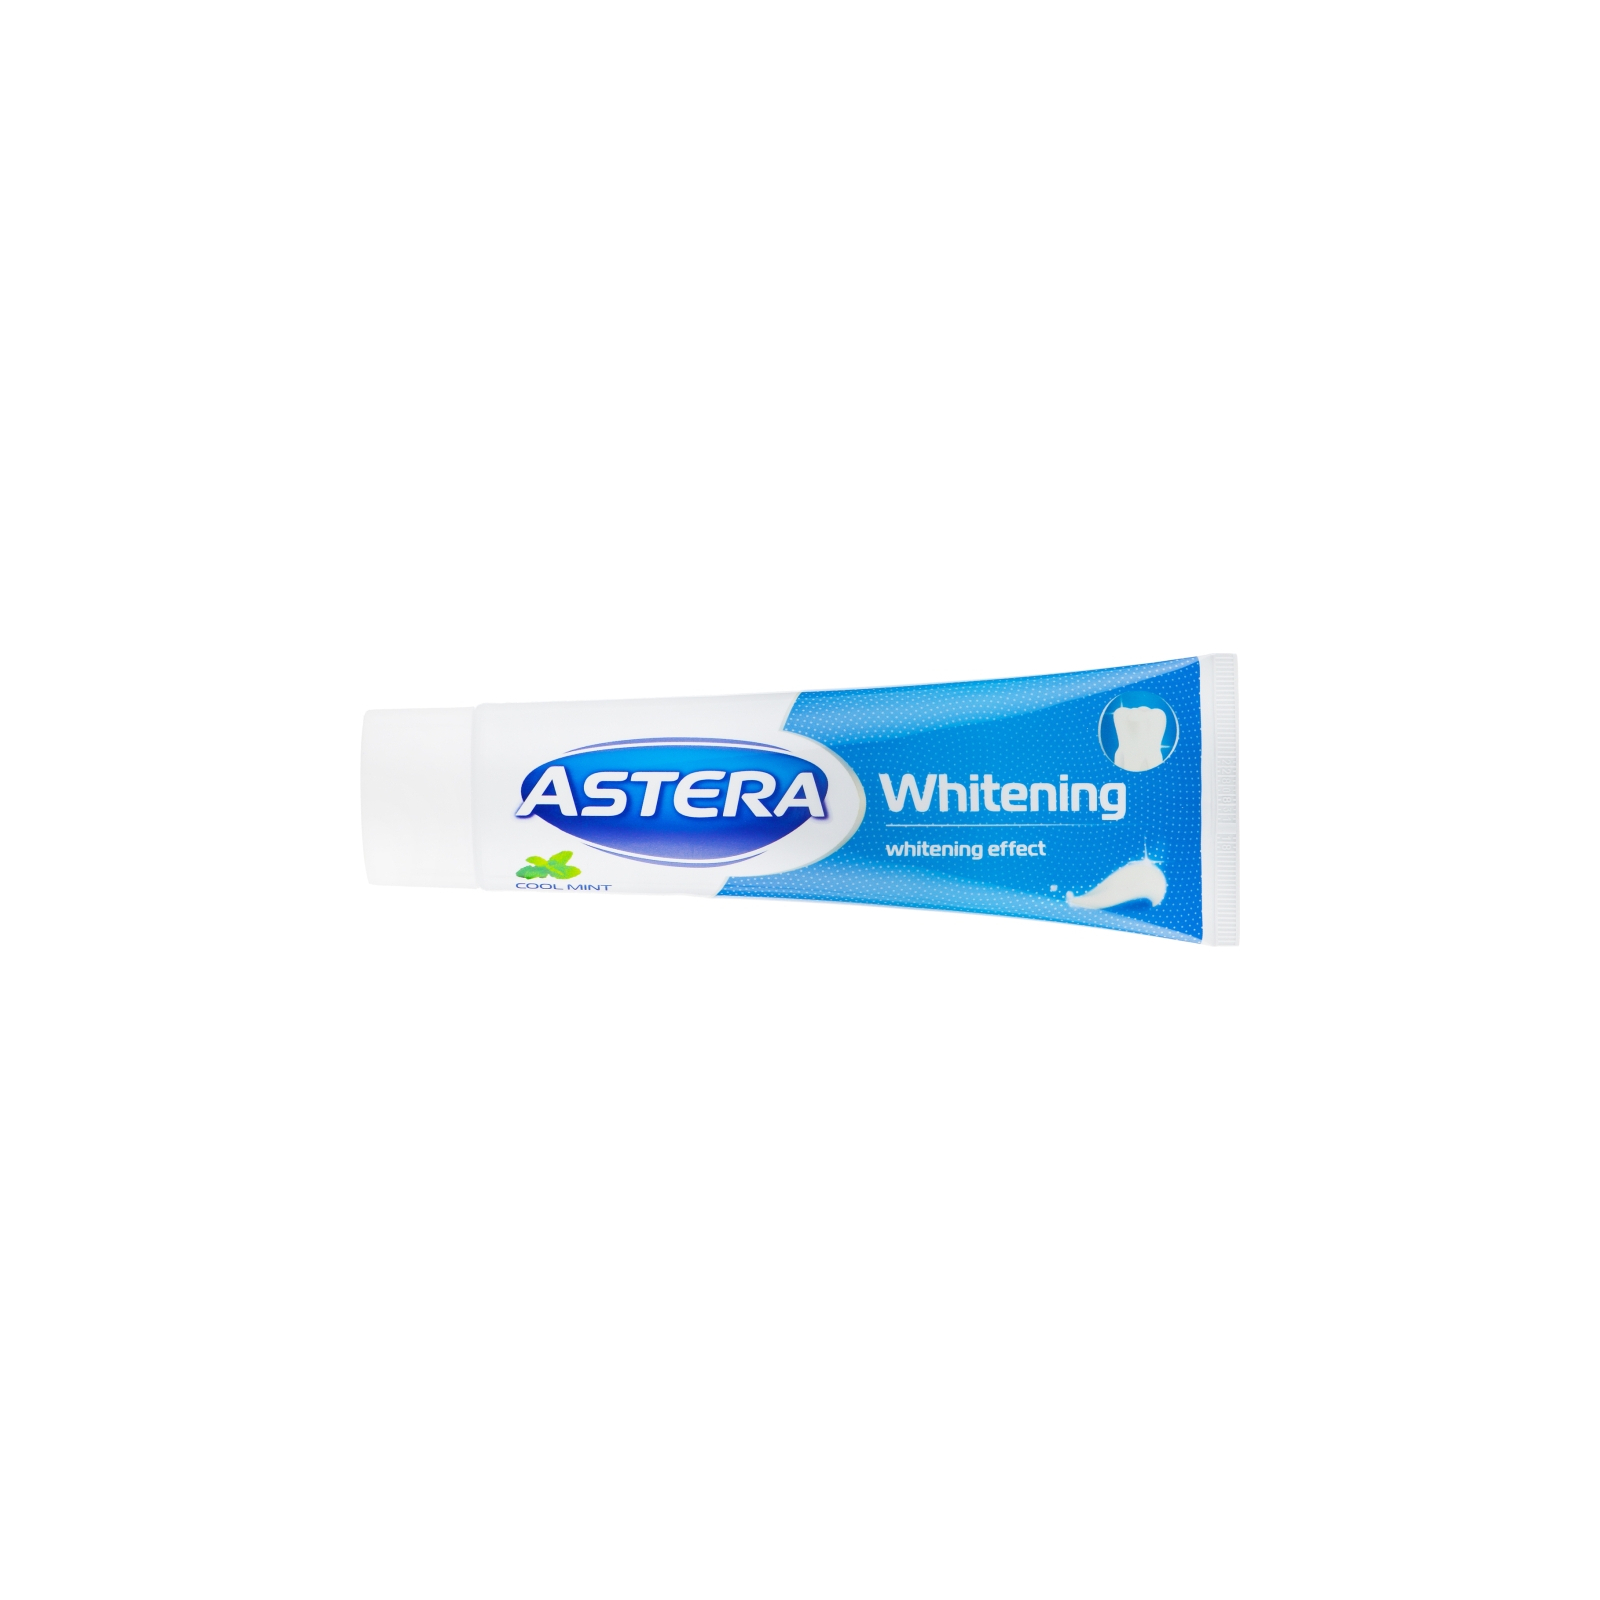 Зубная паста Astera Whitening Отбеливающая 150 мл (3800013516898)